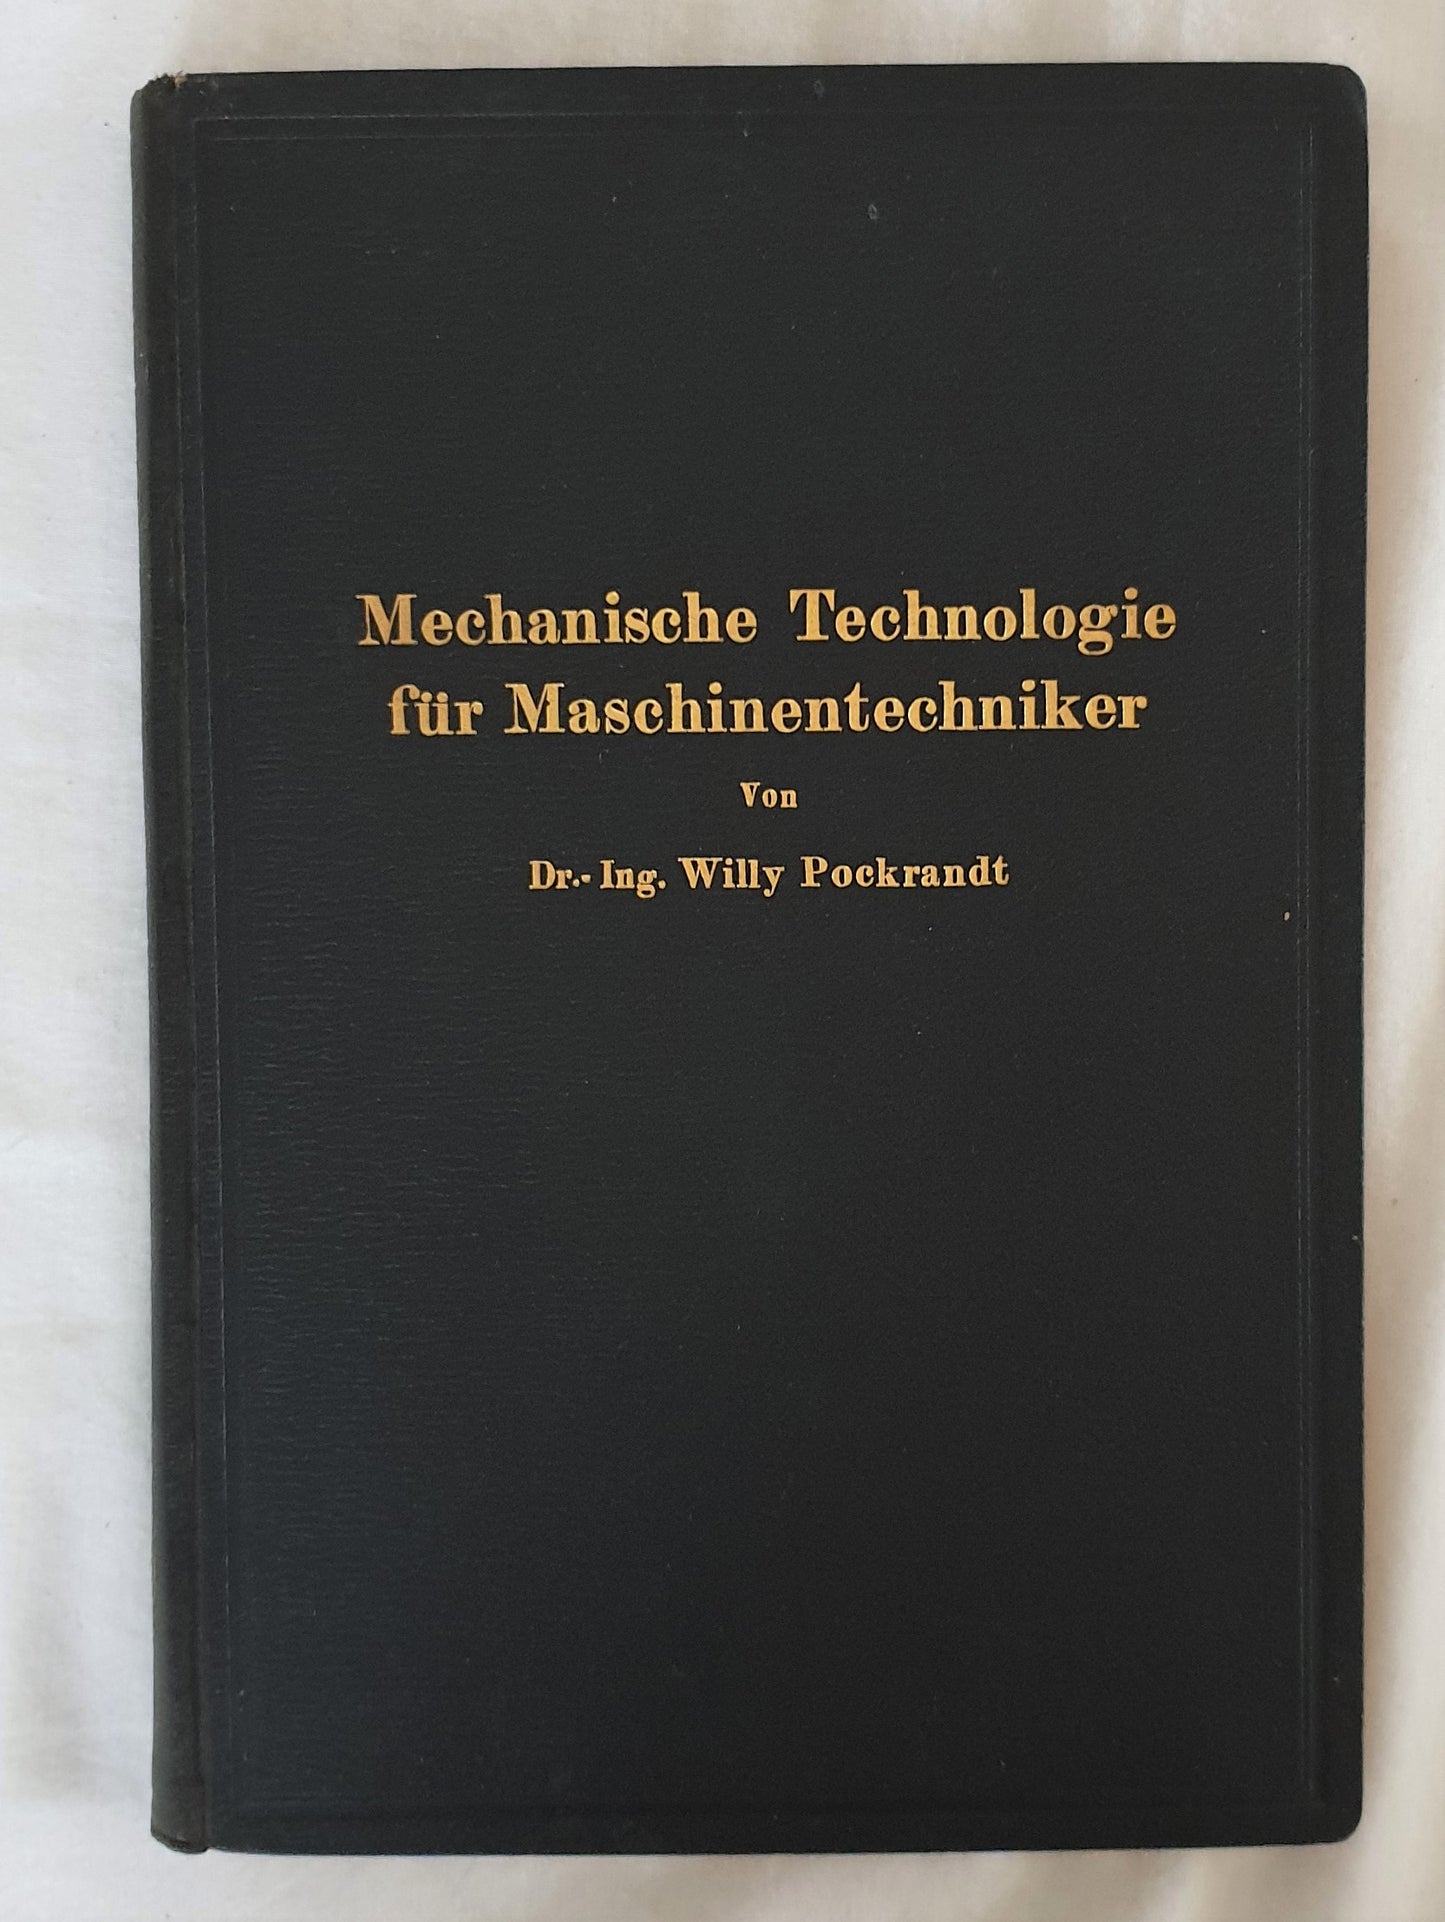 Mechanische Technologie fur Maschinentechniker by Willy Pockrandt